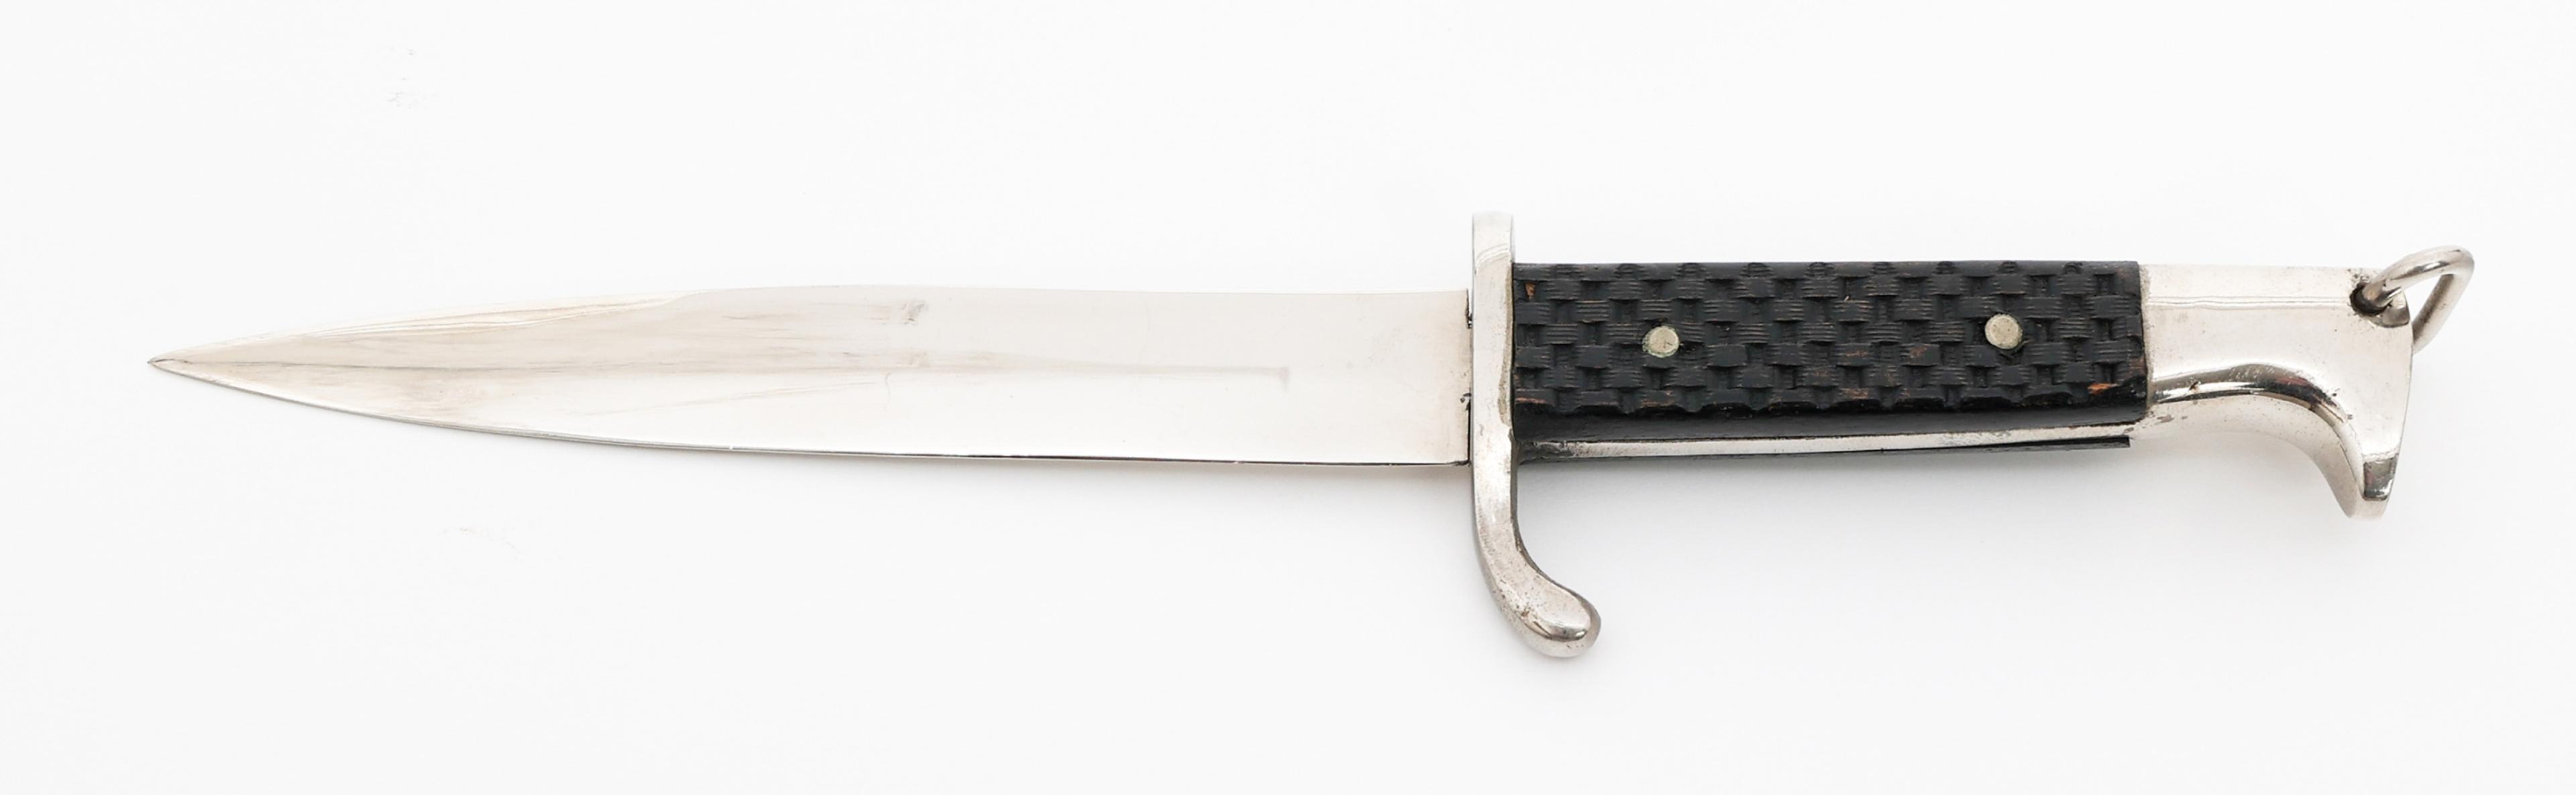 WWII GERMAN K98 KNIFE WITH SCABBARD